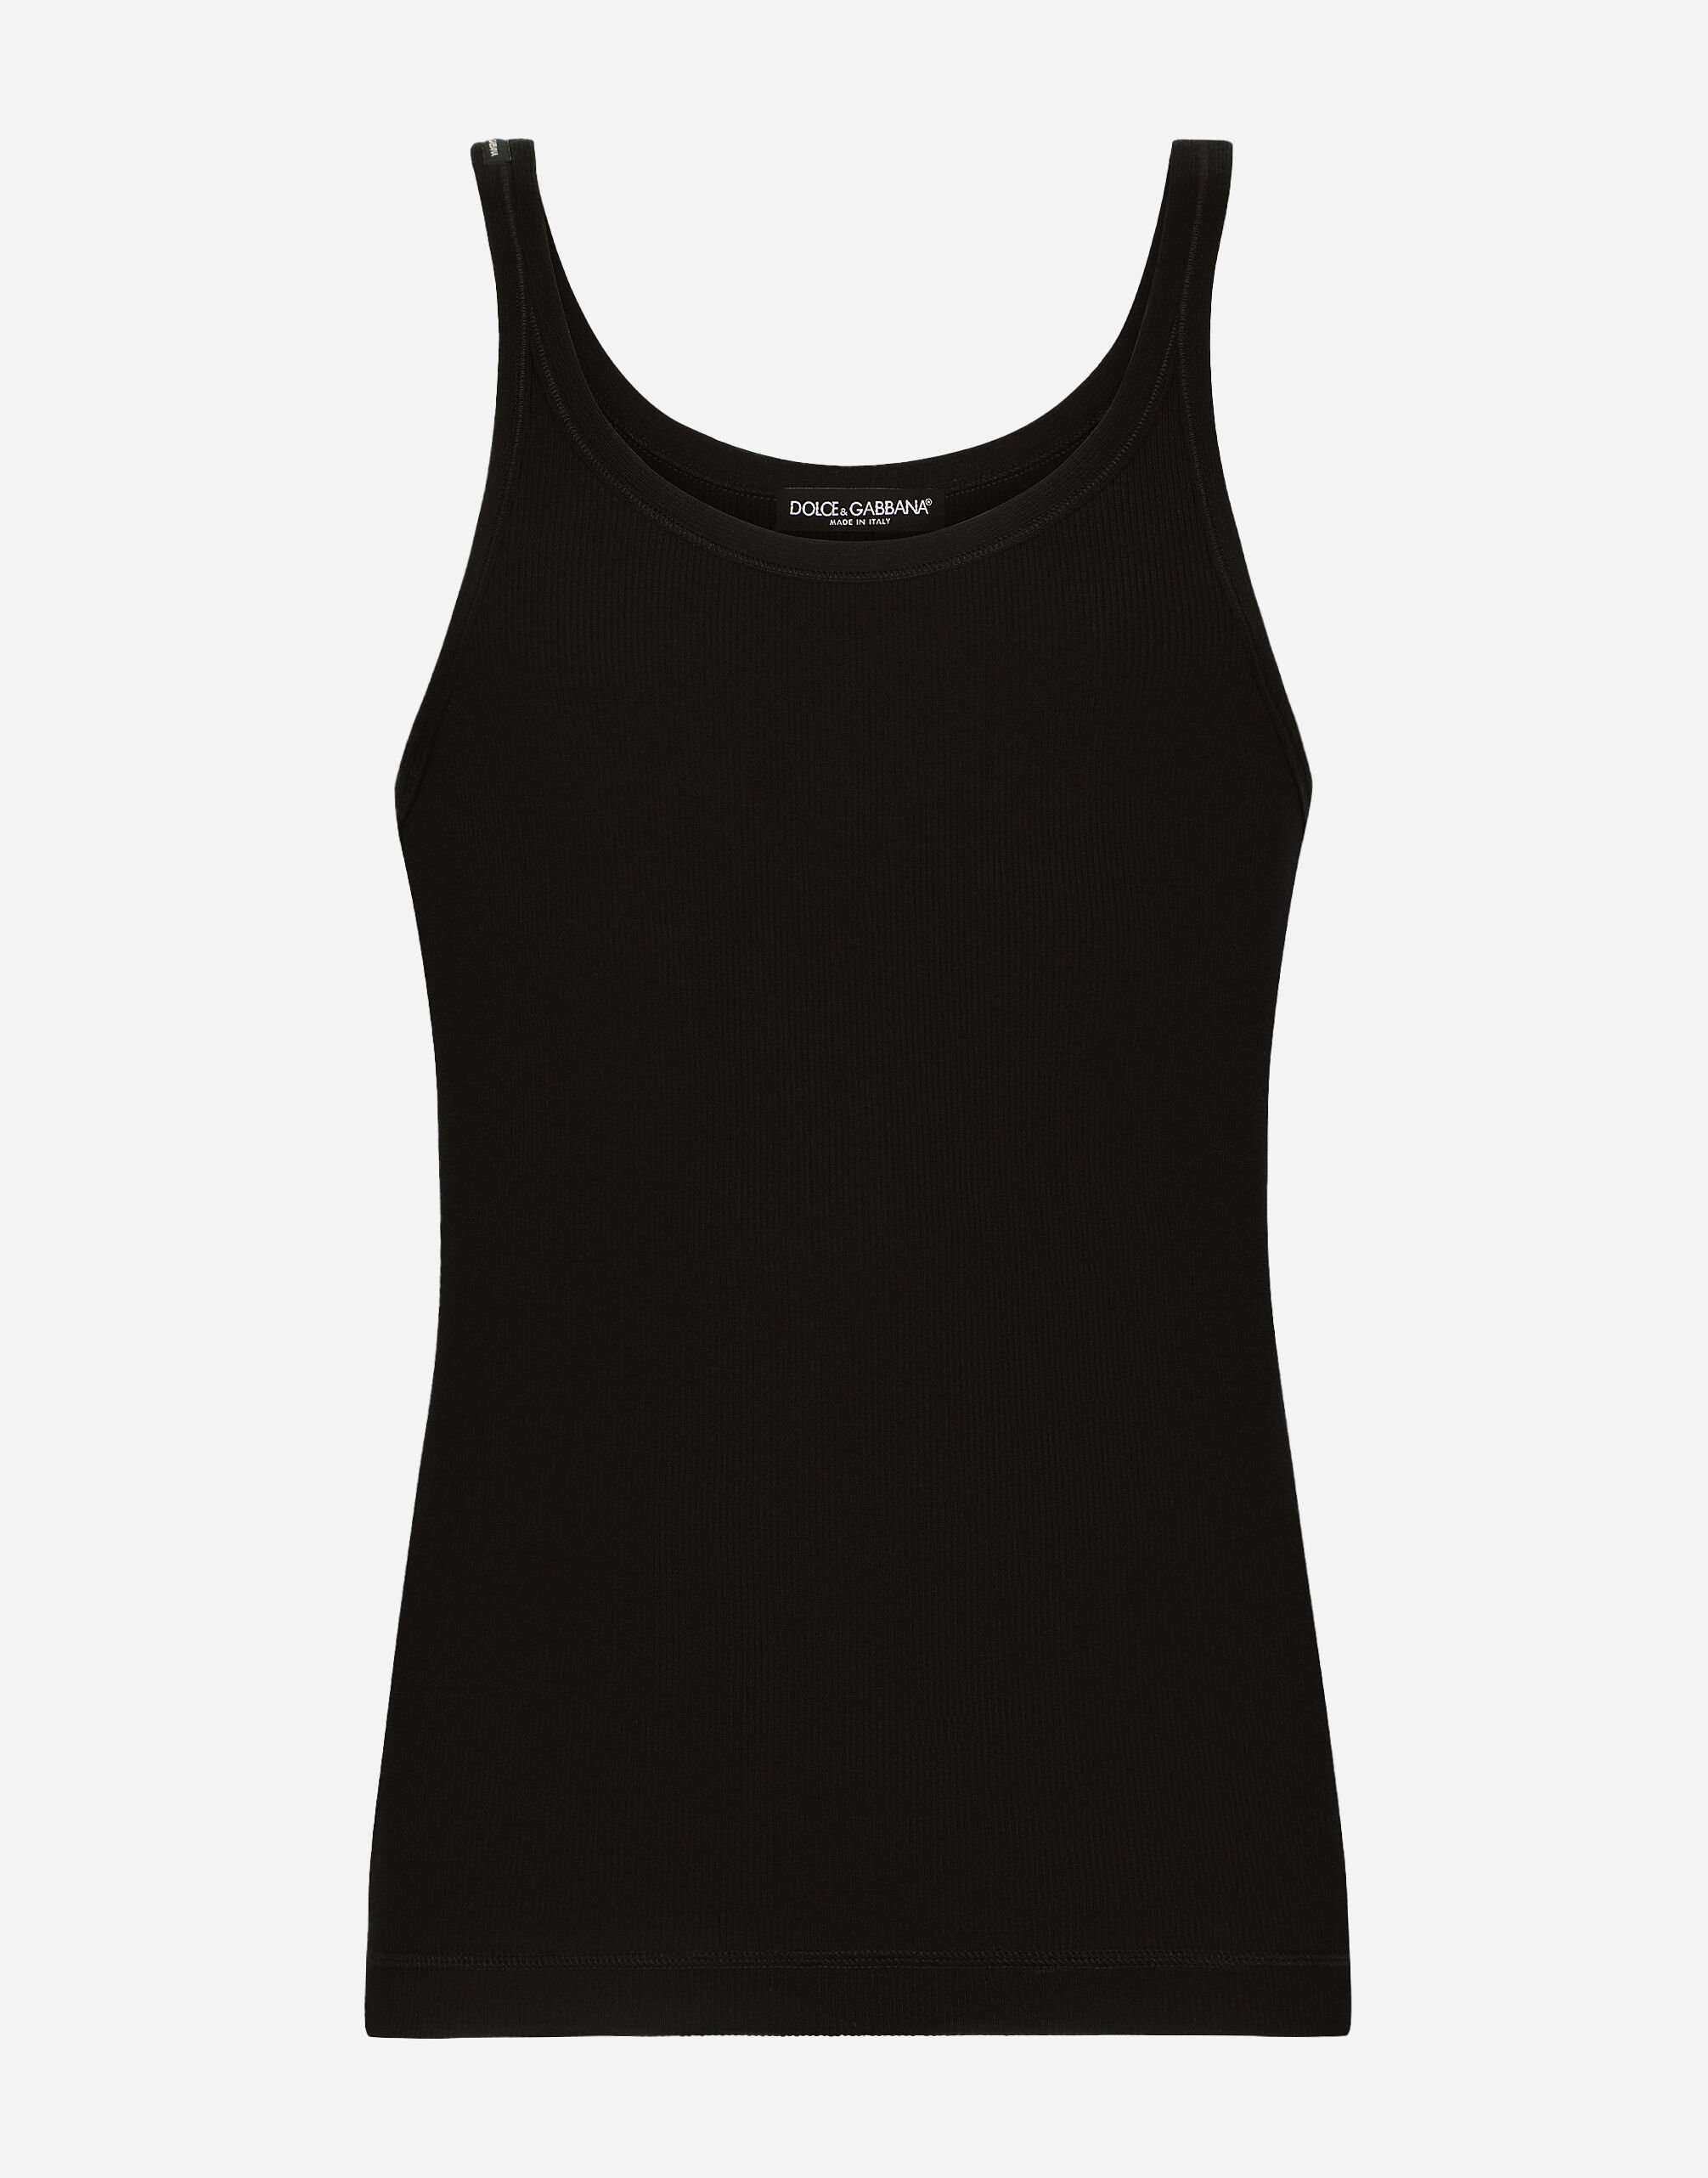 Dolce & Gabbana Camiseta sin mangas de algodón acanalado lavado Negro VG446FVP187